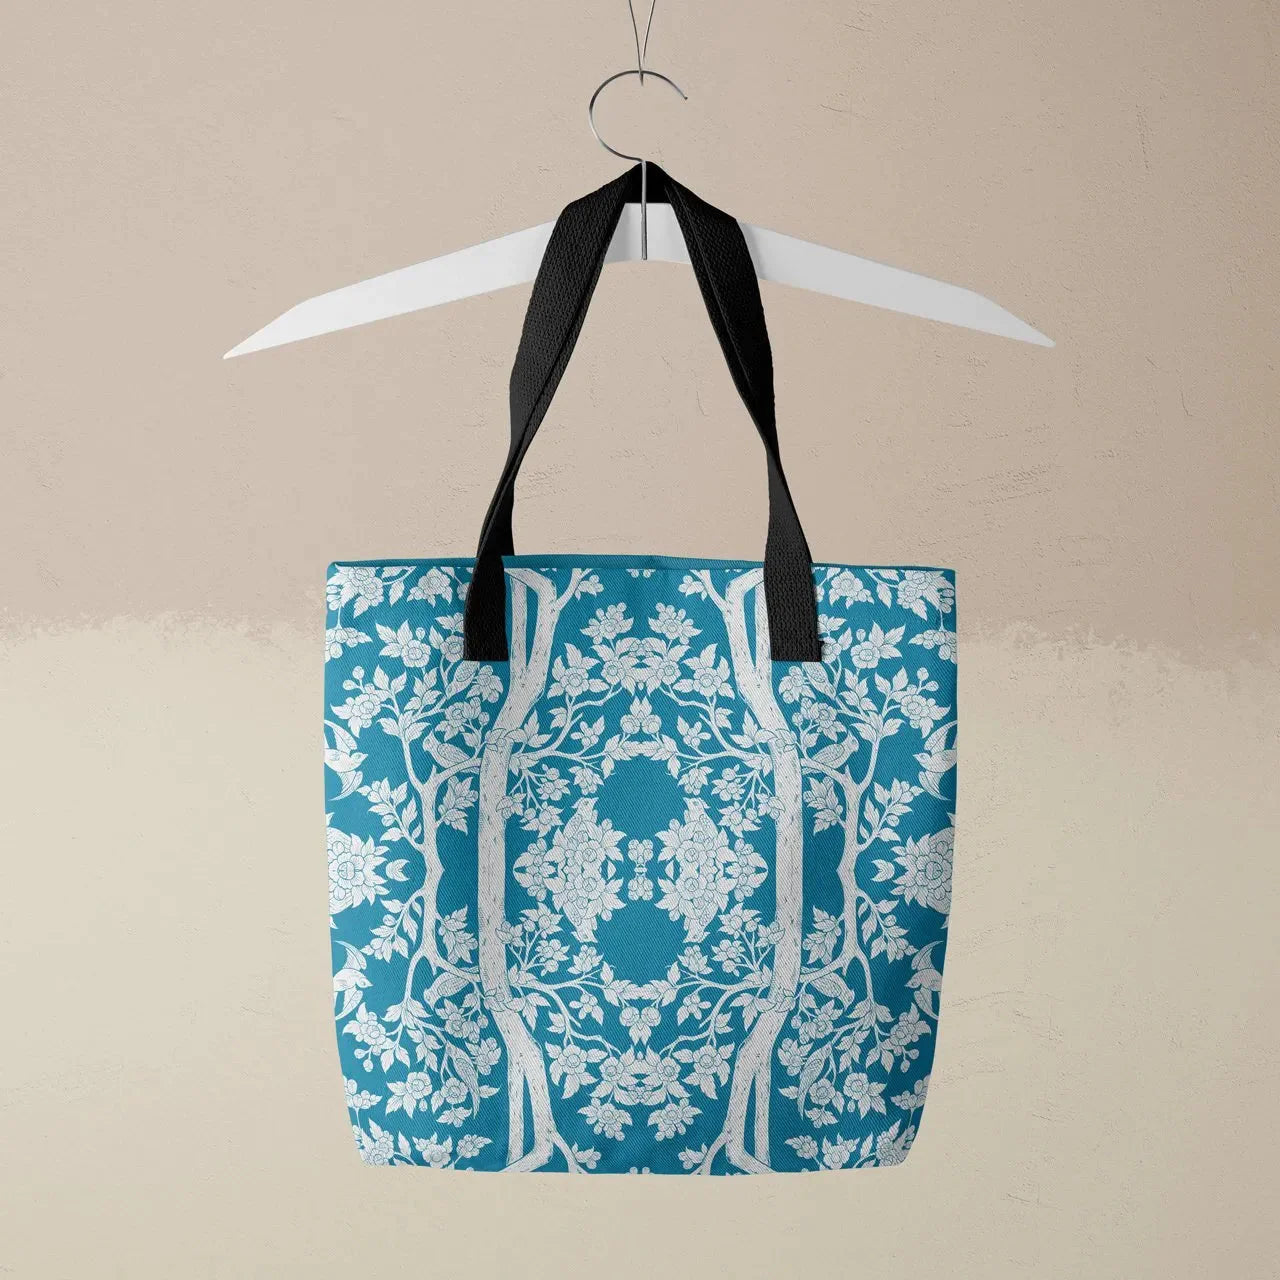 Aviary Tote - Bluebird - Heavy Duty Reusable Grocery Bag - Black Handles - Shopping Totes - Aesthetic Art